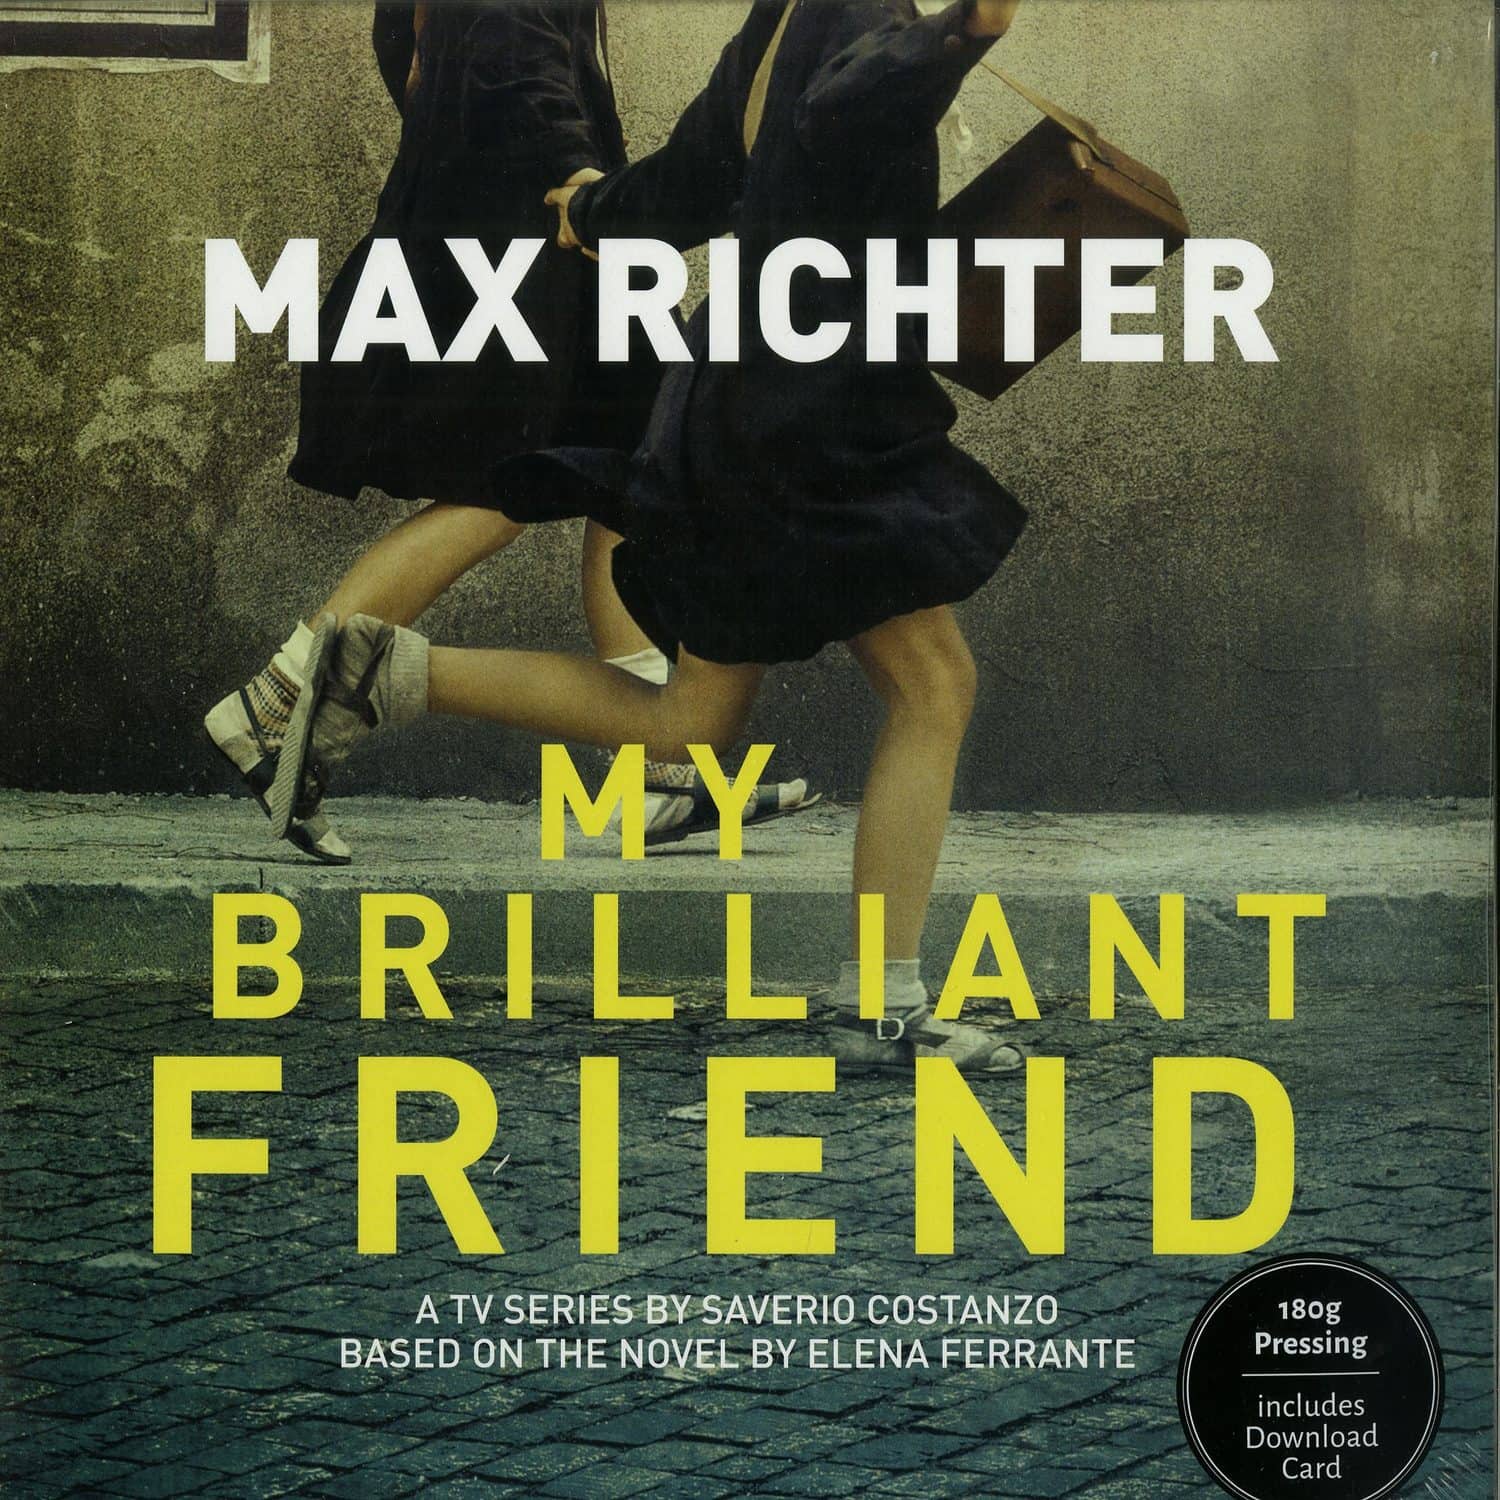 Max Richter - MY BRILLIANT FRIEND O.S.T. 